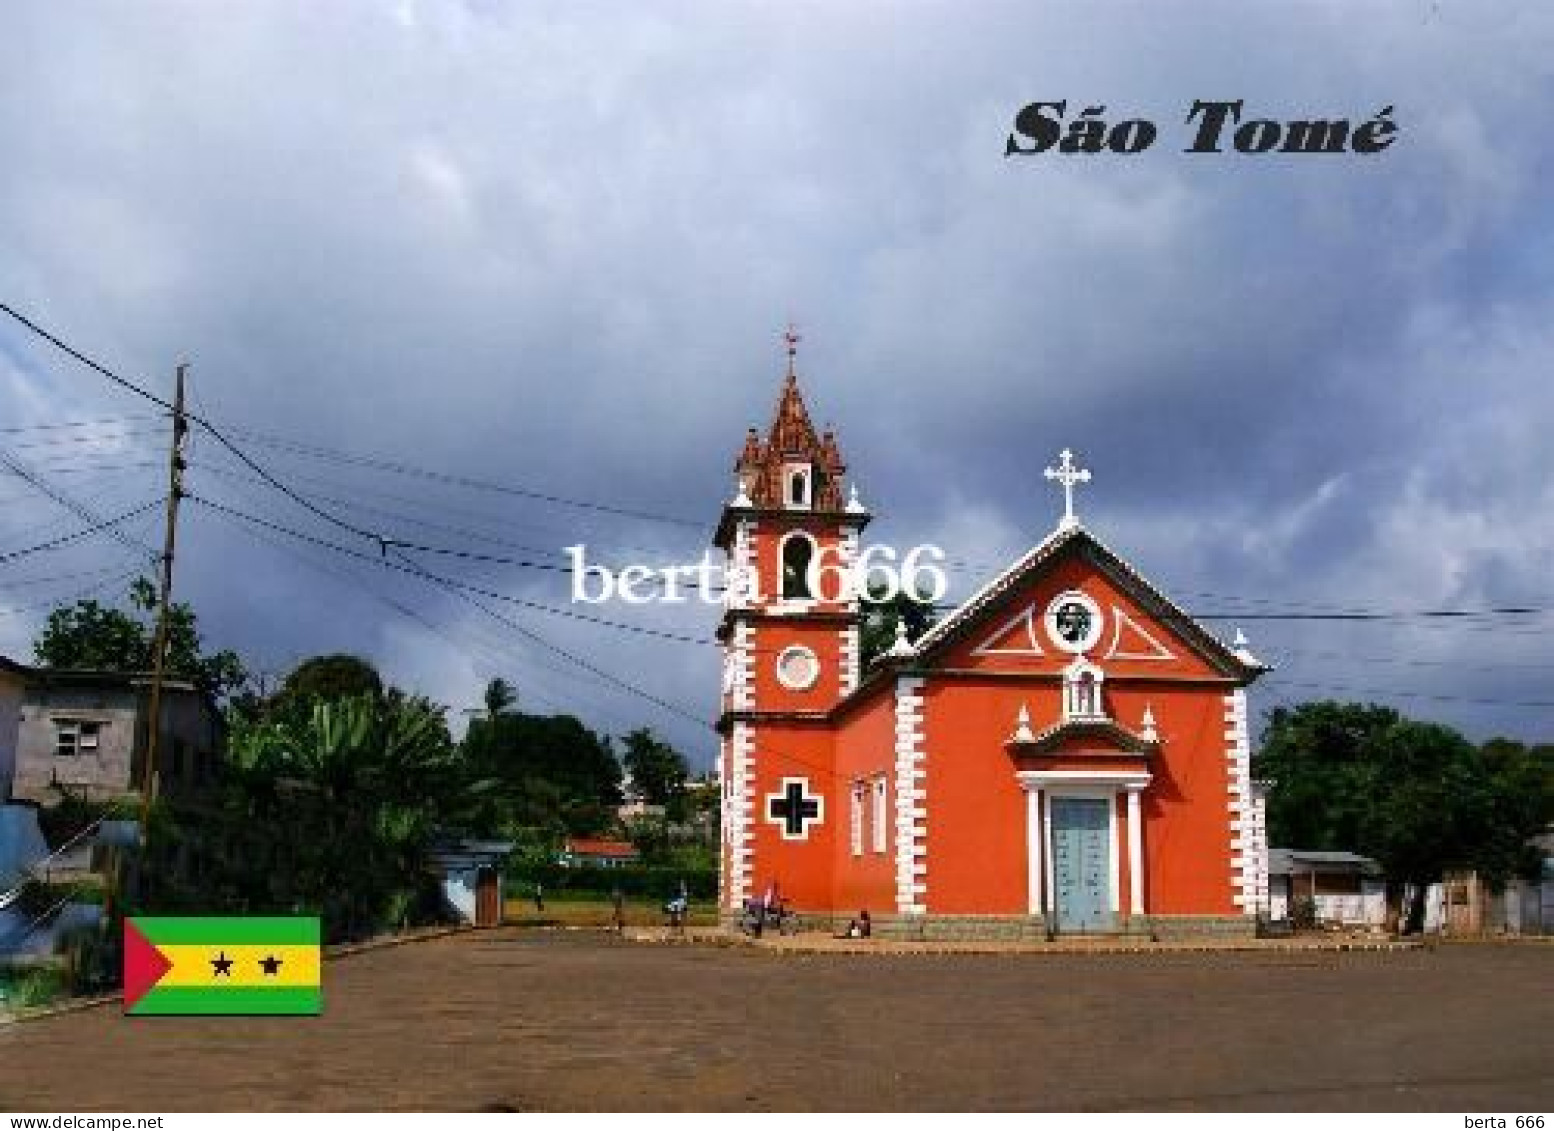 Sao Tome And Principe Pantufo St. Peter Church New Postcard - Sao Tome And Principe